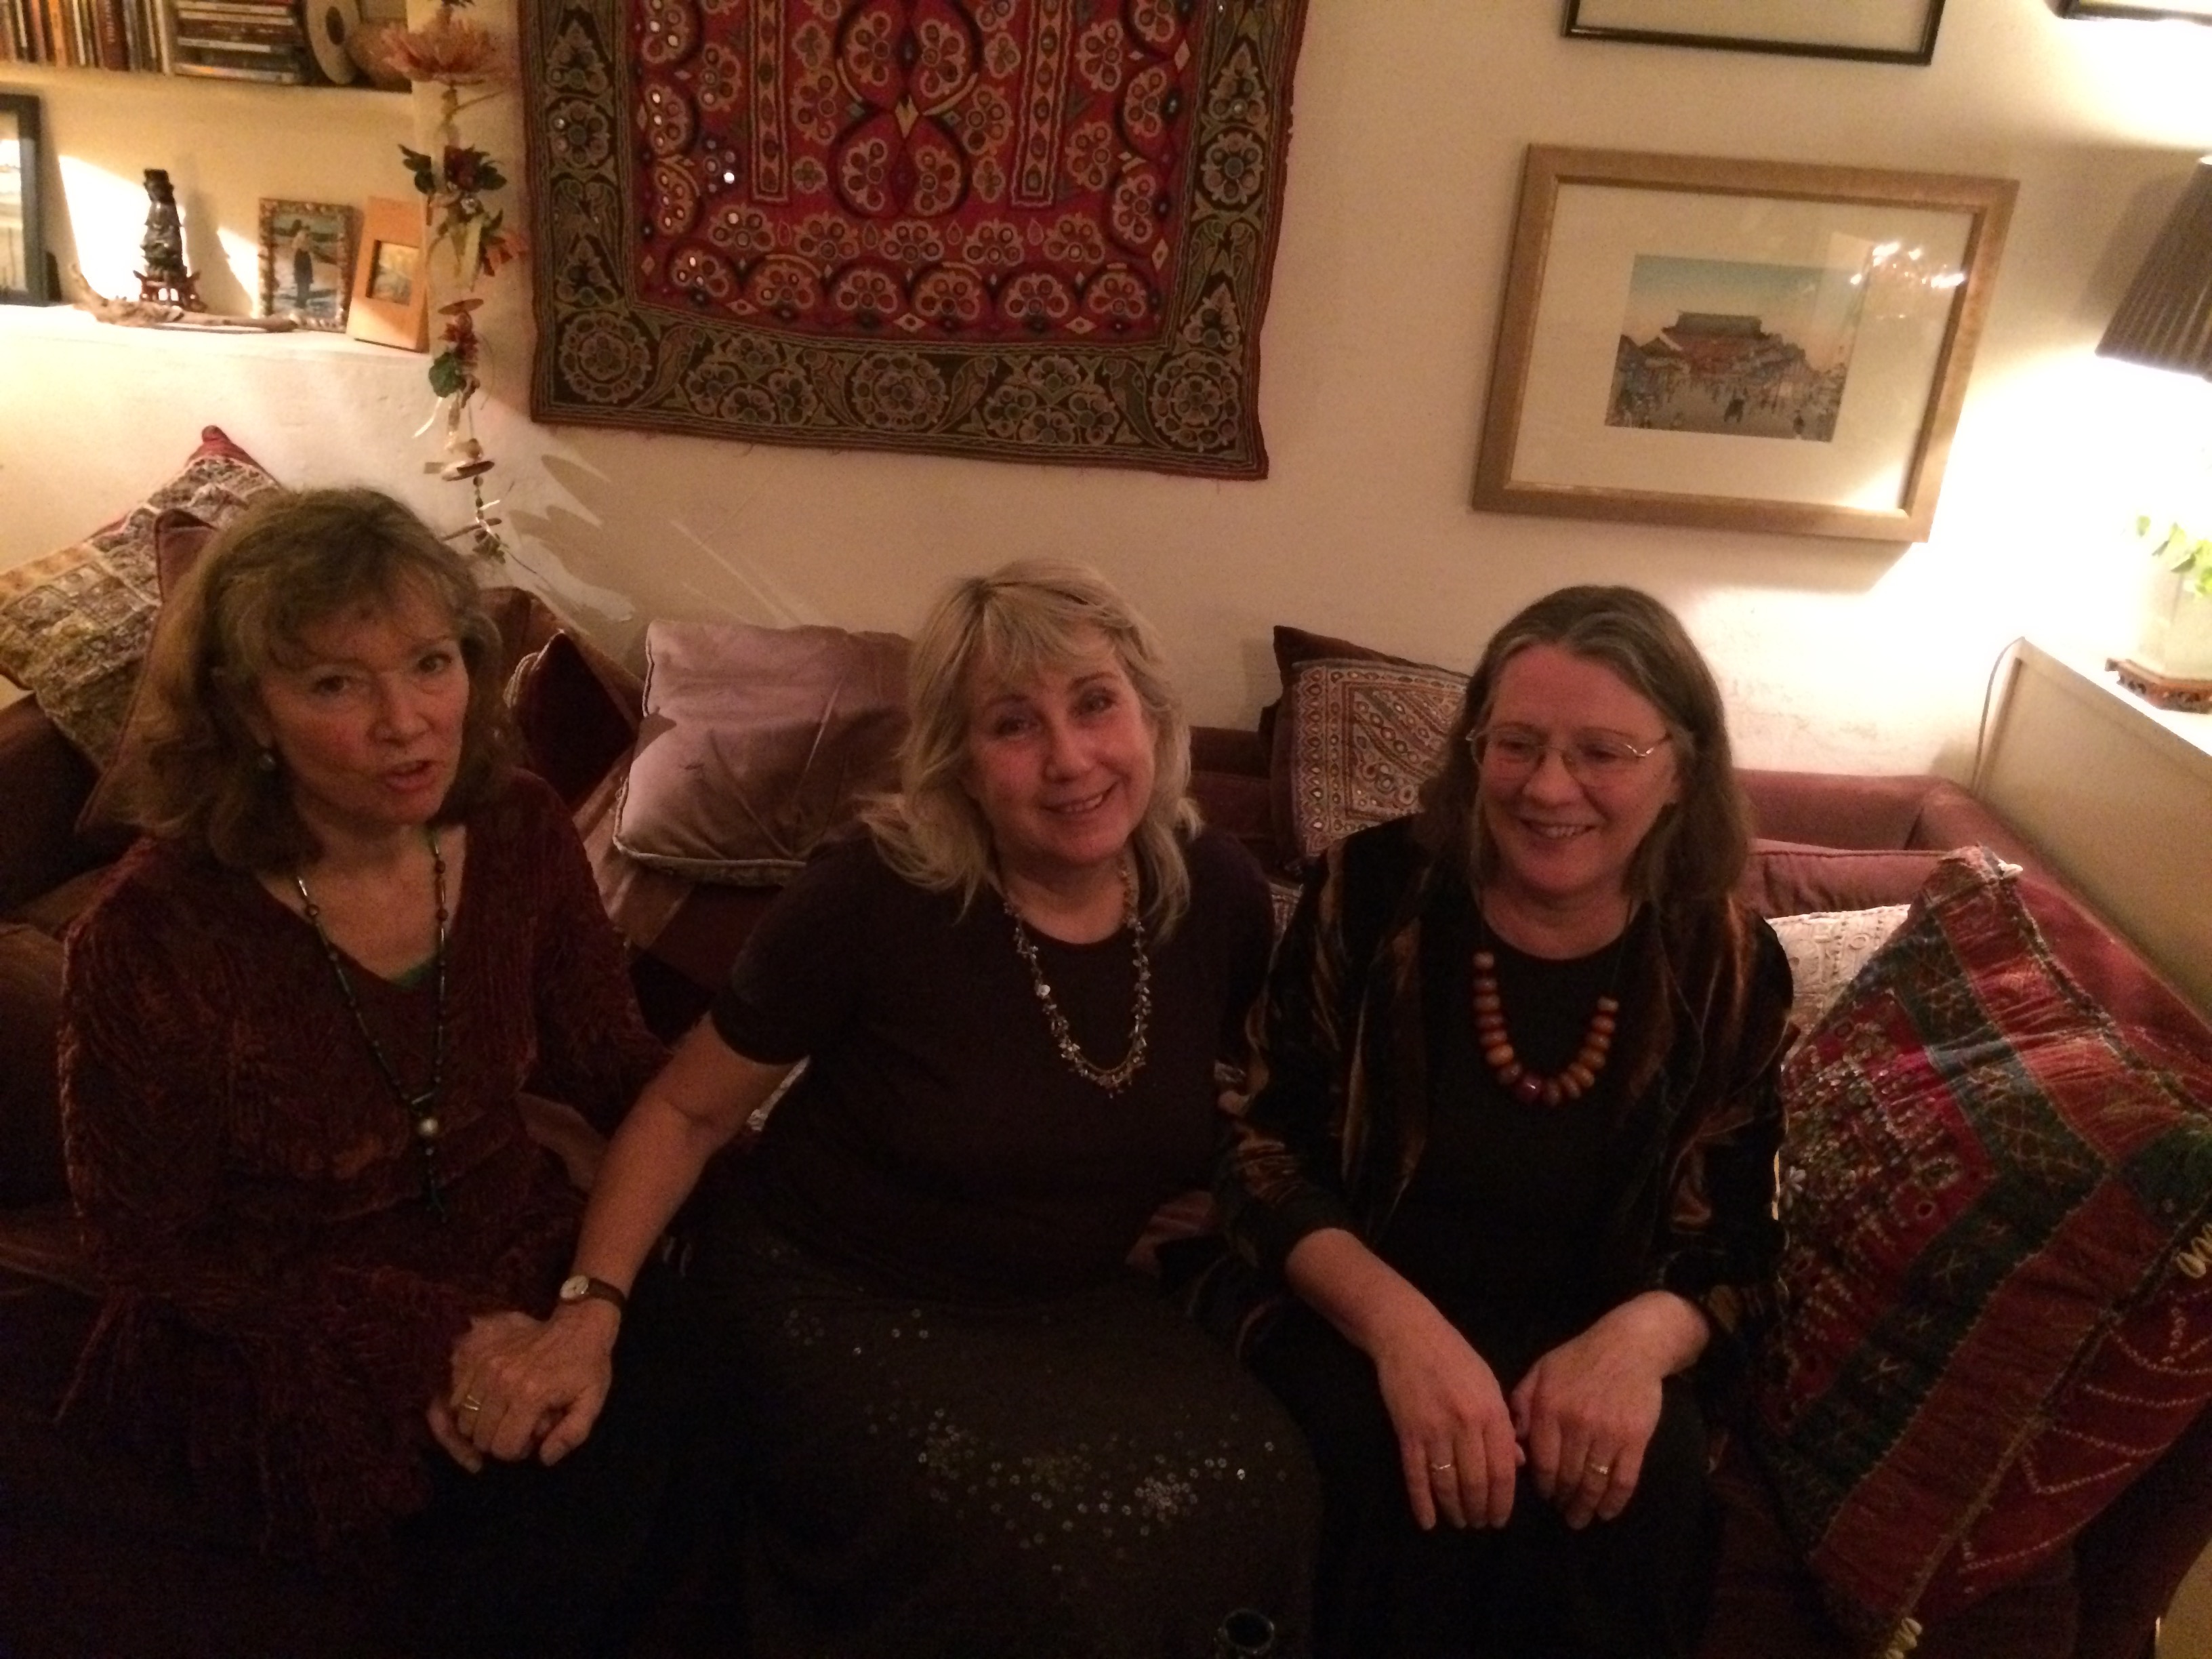 2017 - Feb 11, Helen, Frances, Rosemary at Fran’s